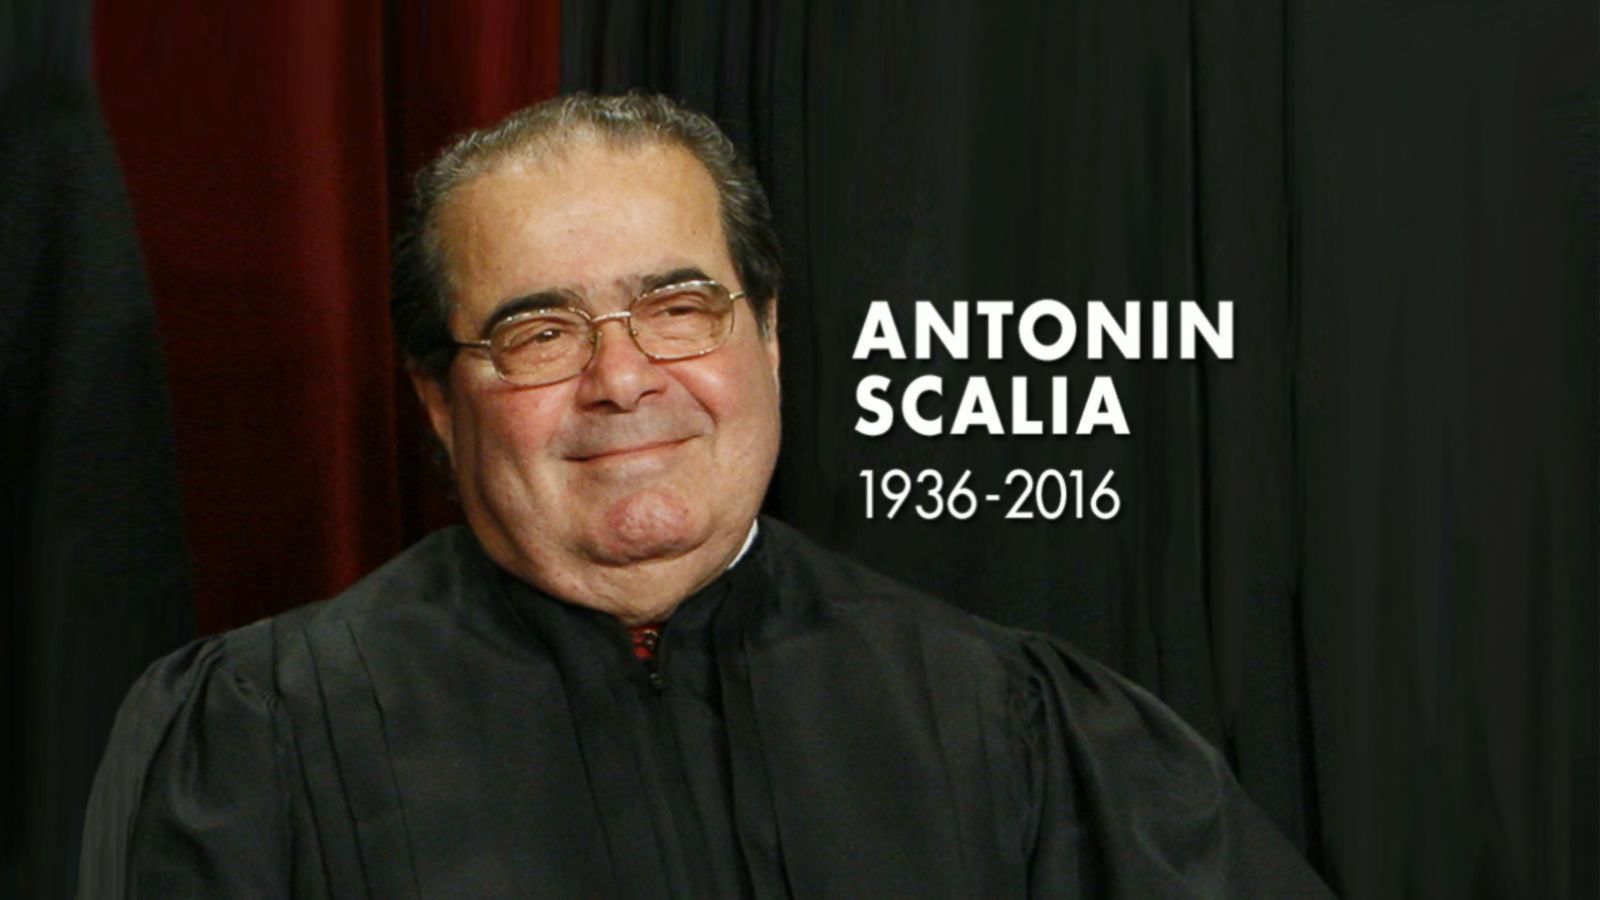 Supreme Court Justice Antonin Scalia Dies at 79